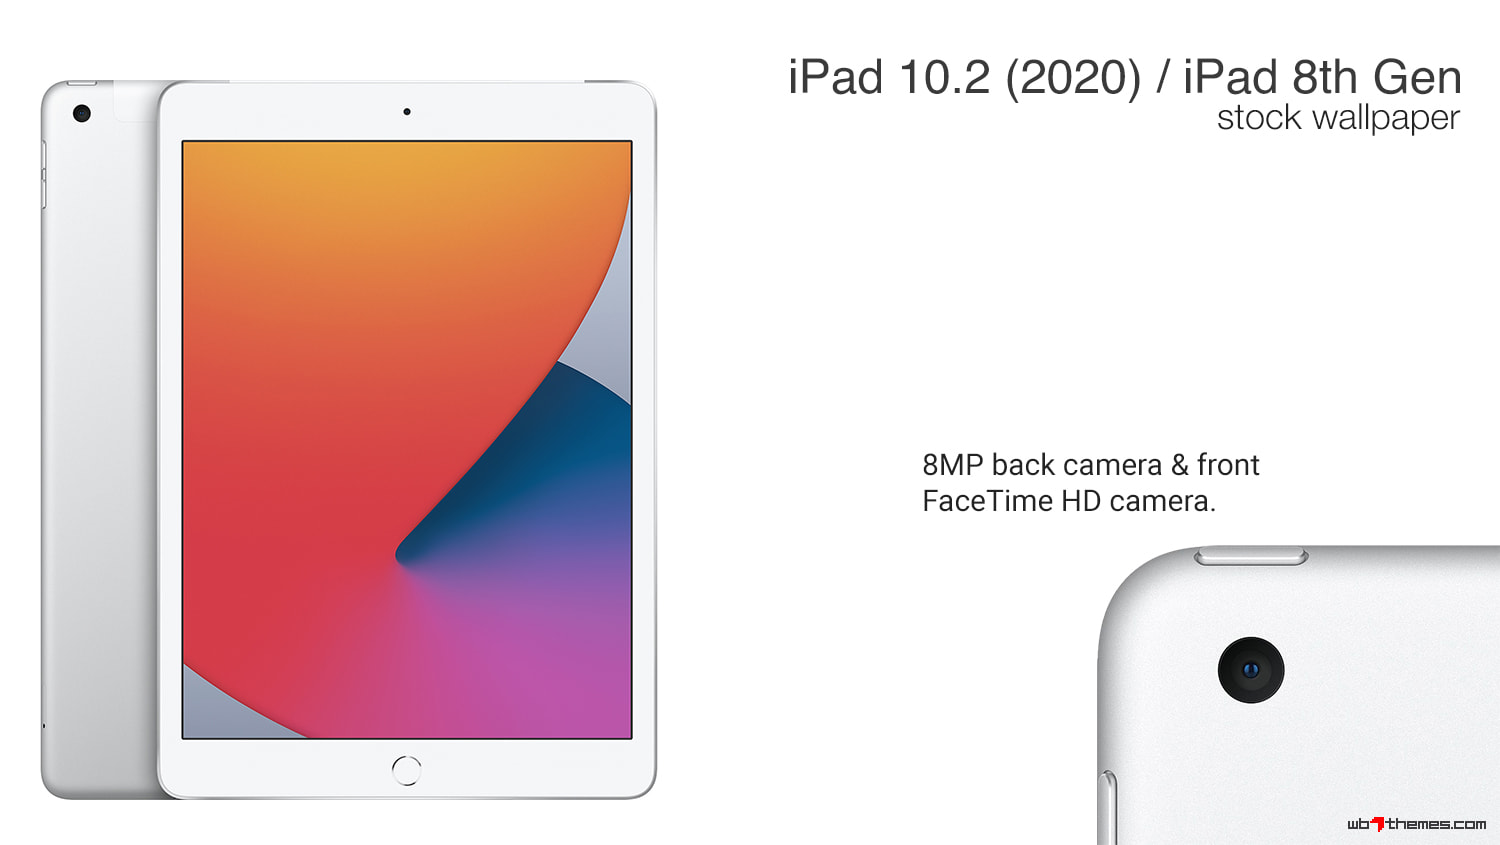 Apple iPad 10.2 (2020) / iPad 8th Gen stock wallpaper